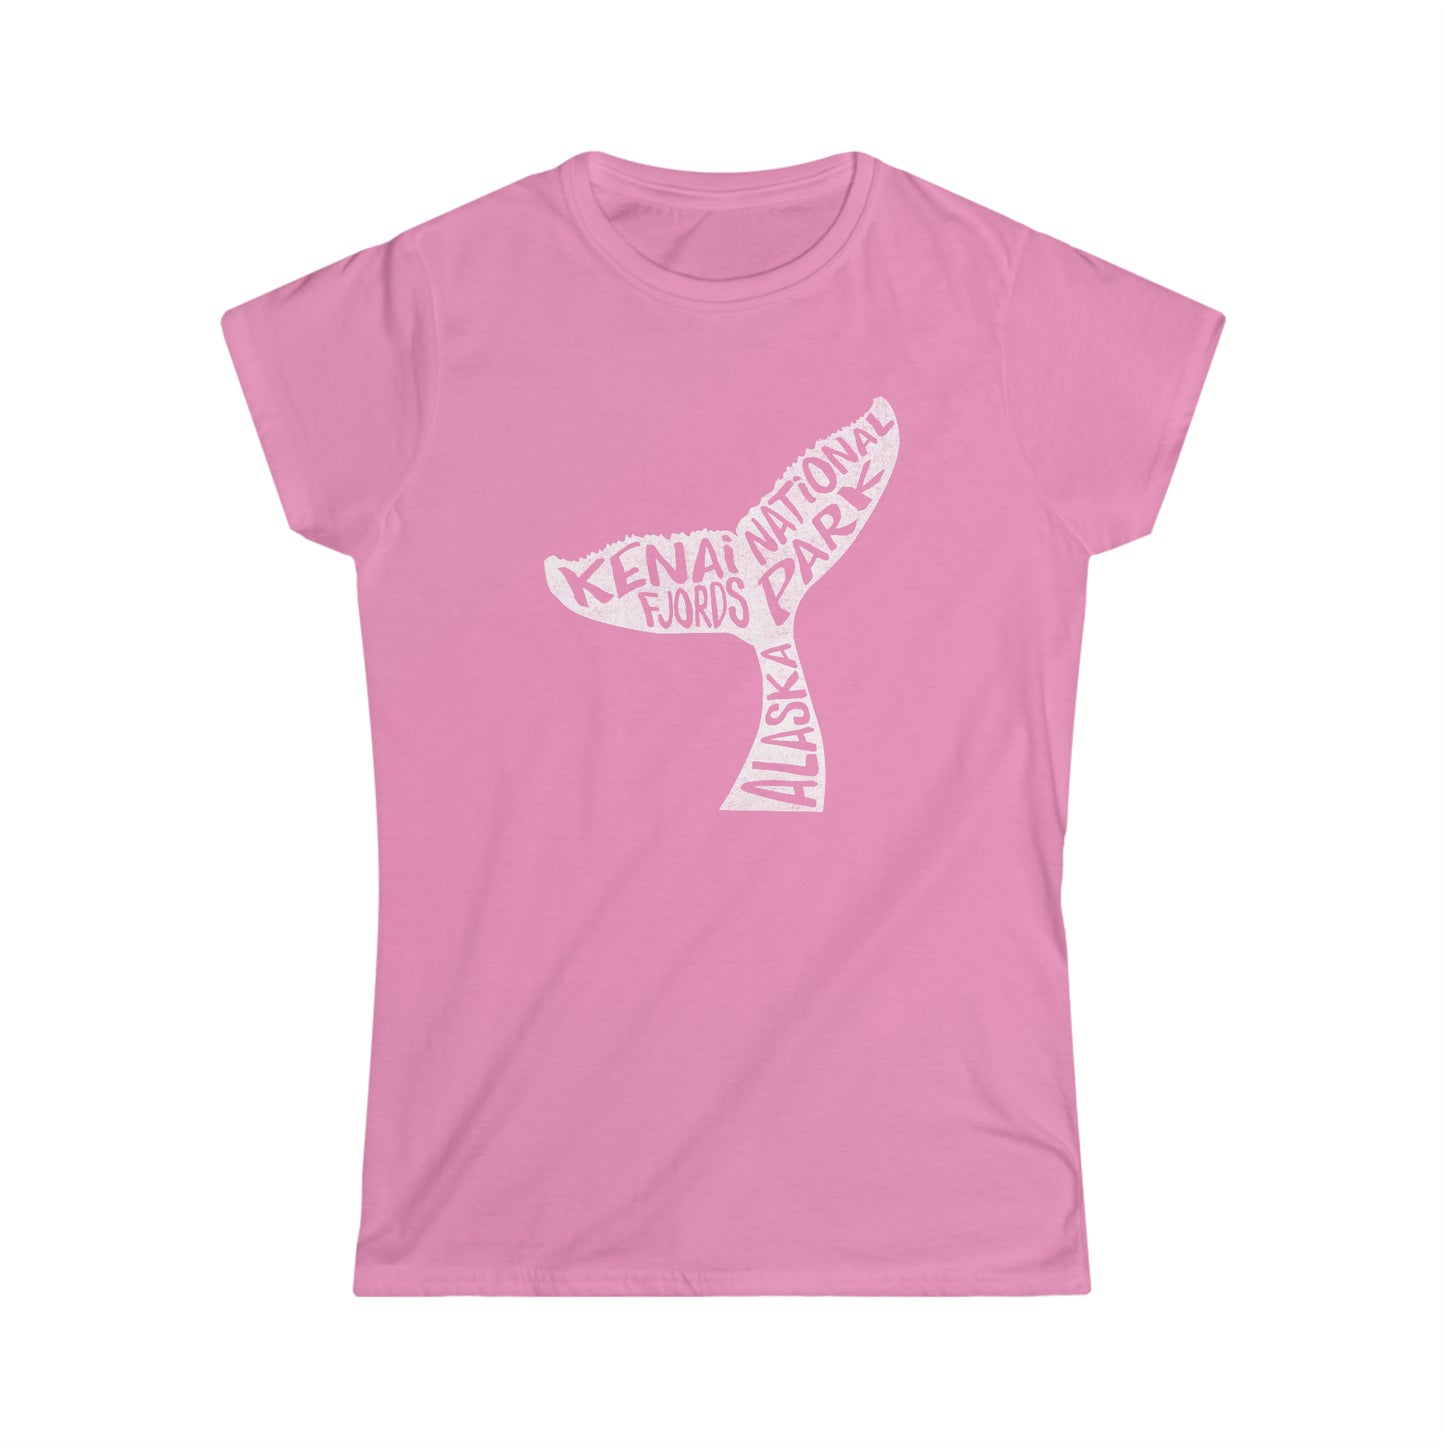 Kenai Fjords National Park Women's T-Shirt - Whale Tail